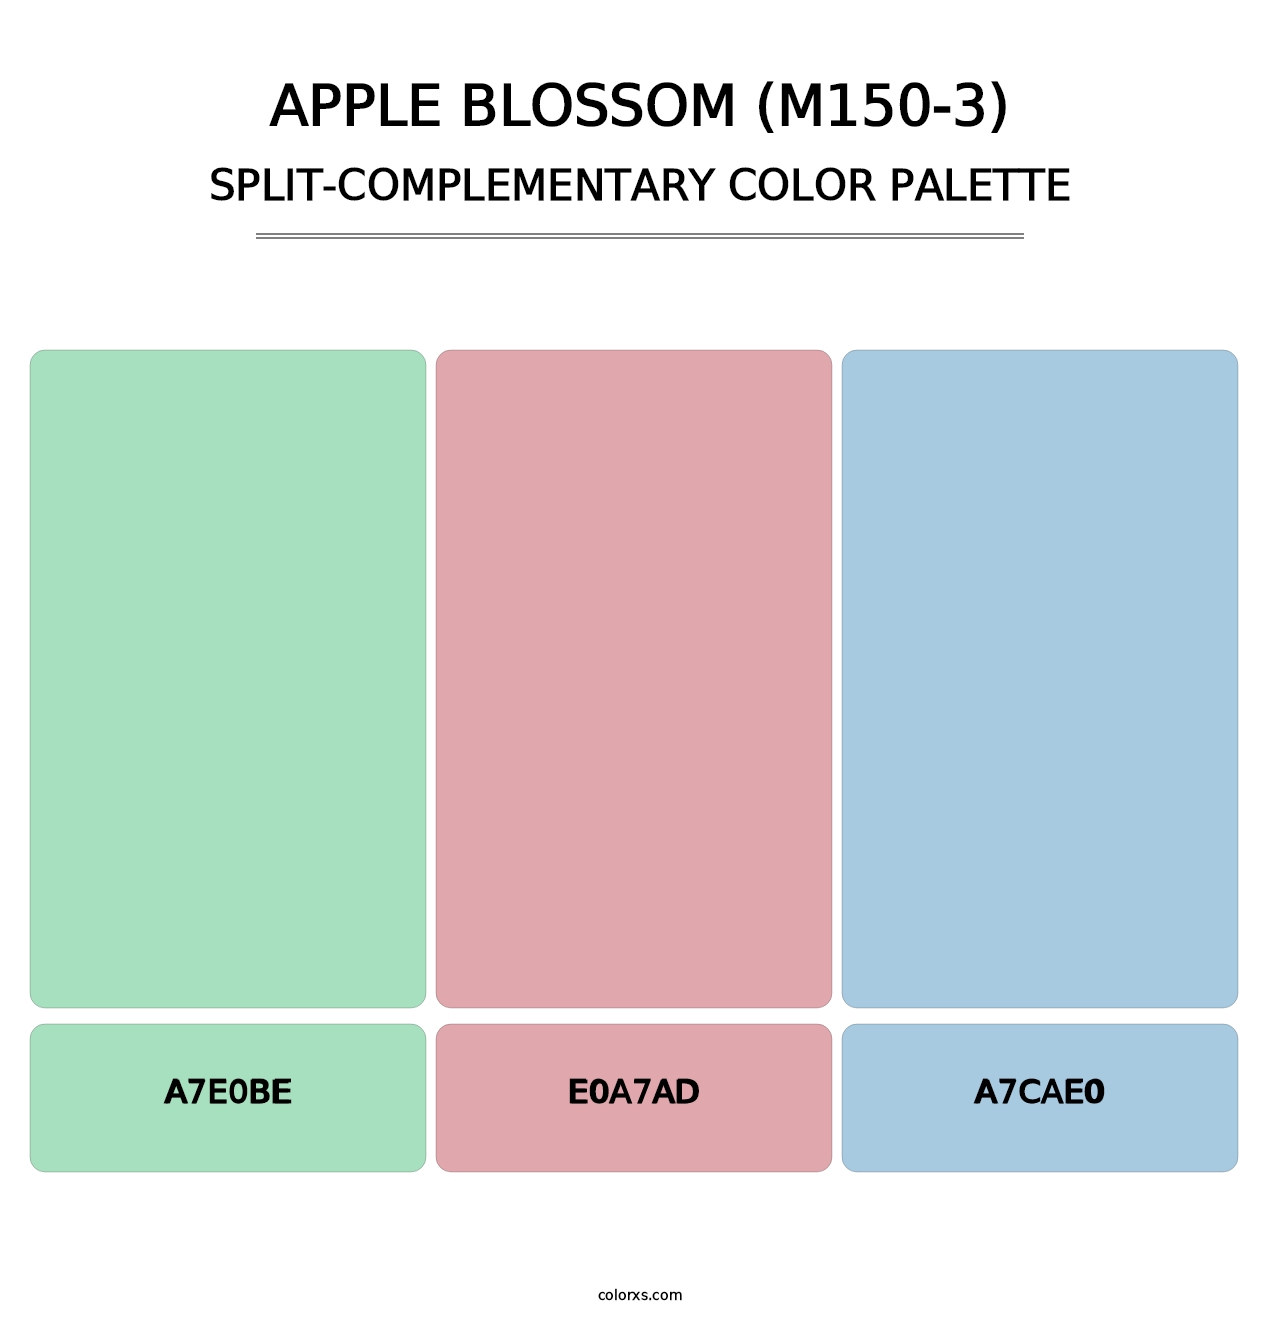 Apple Blossom (M150-3) - Split-Complementary Color Palette